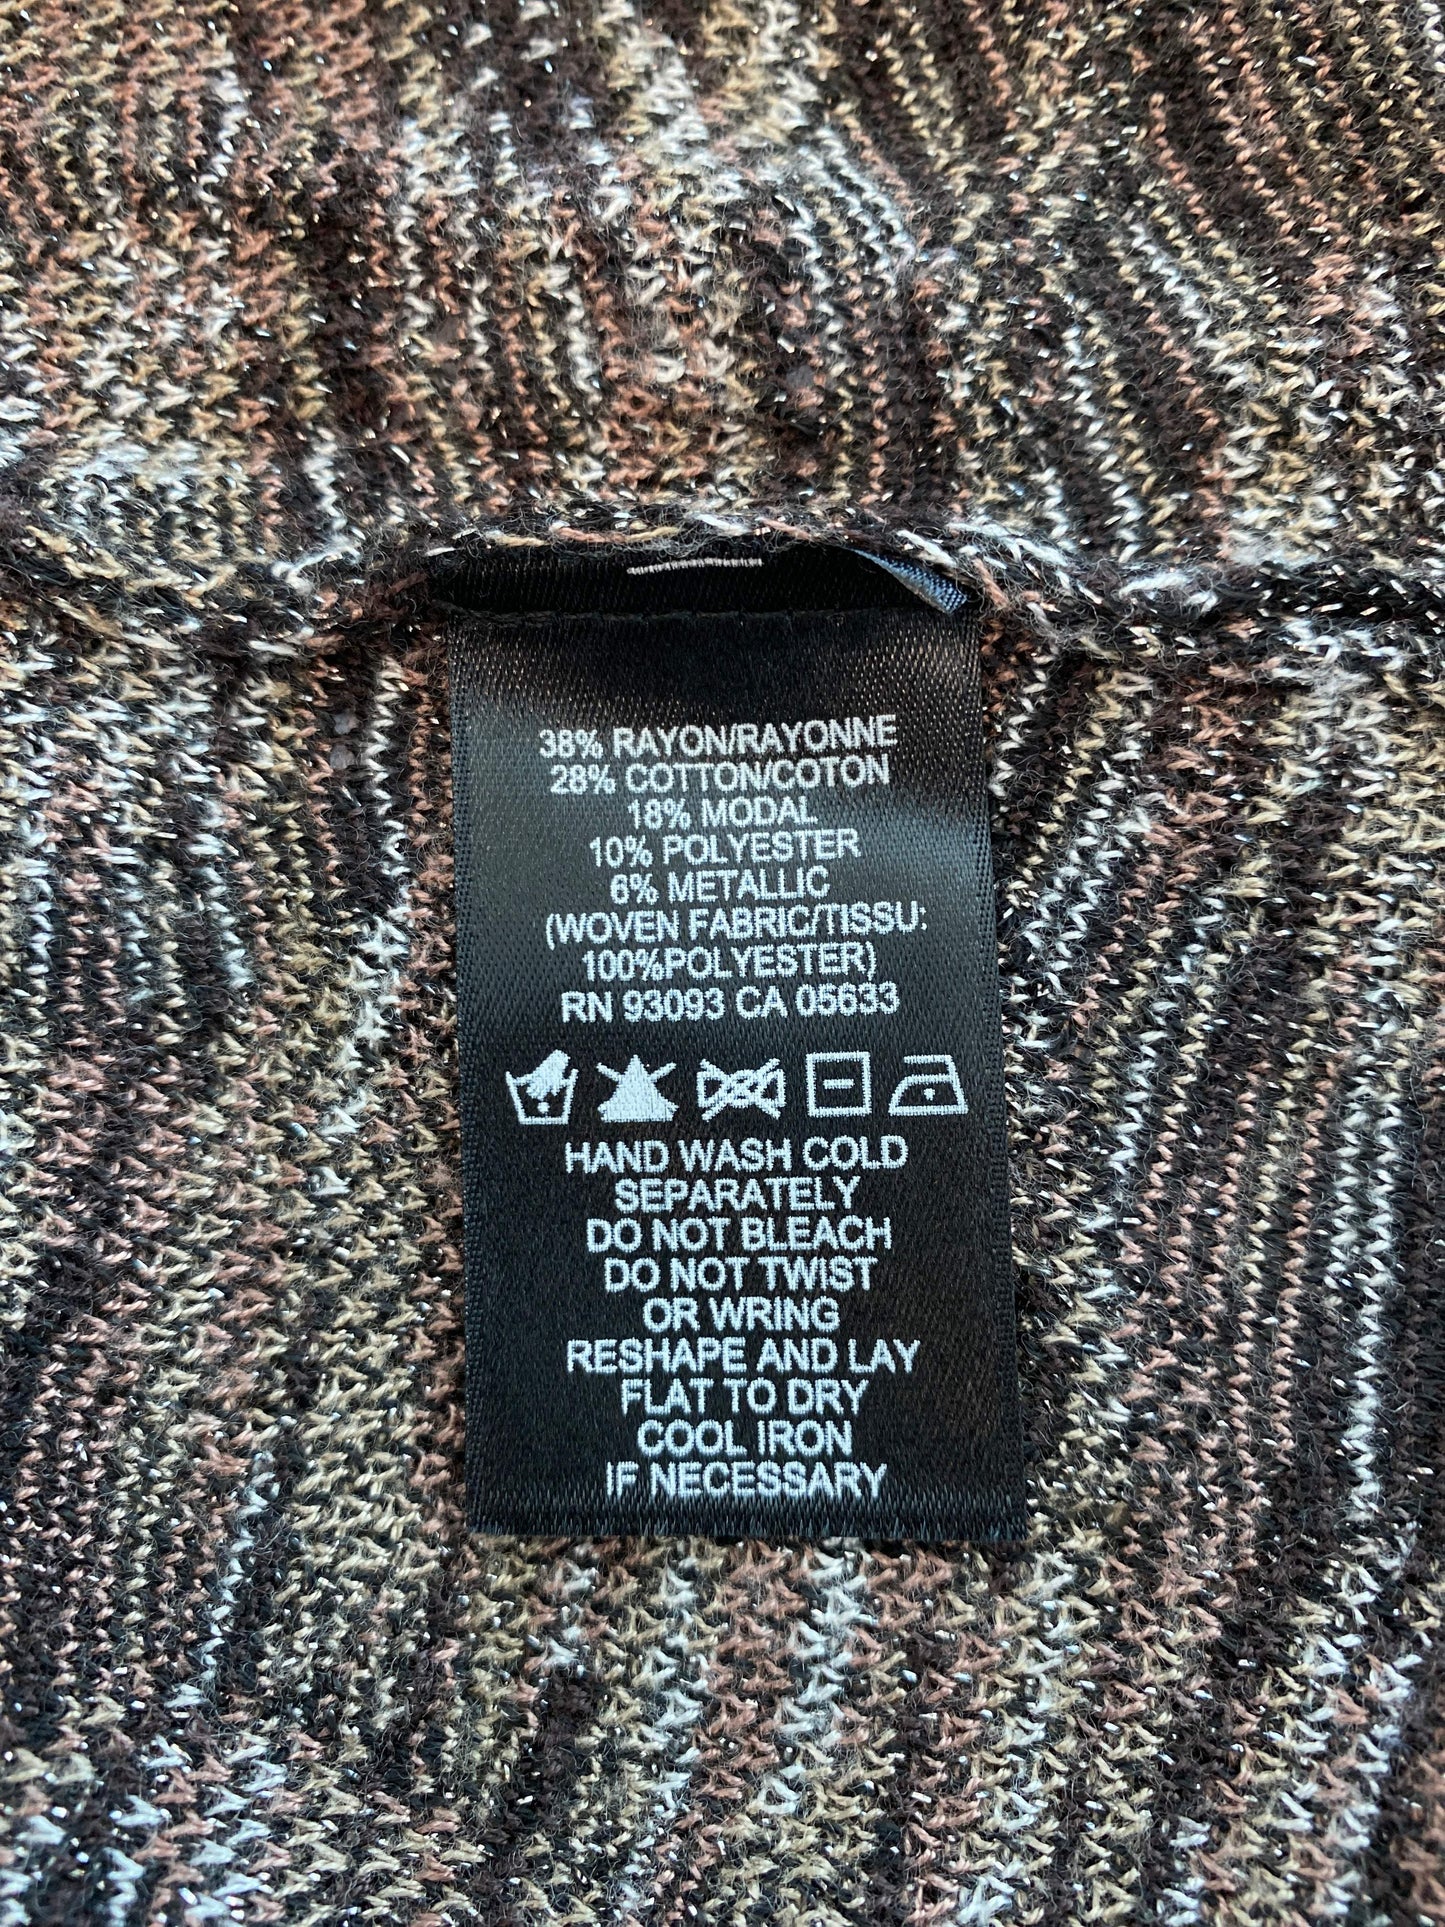 Zozo Black/Multi XL Rayon/Cotton Sweater NWT